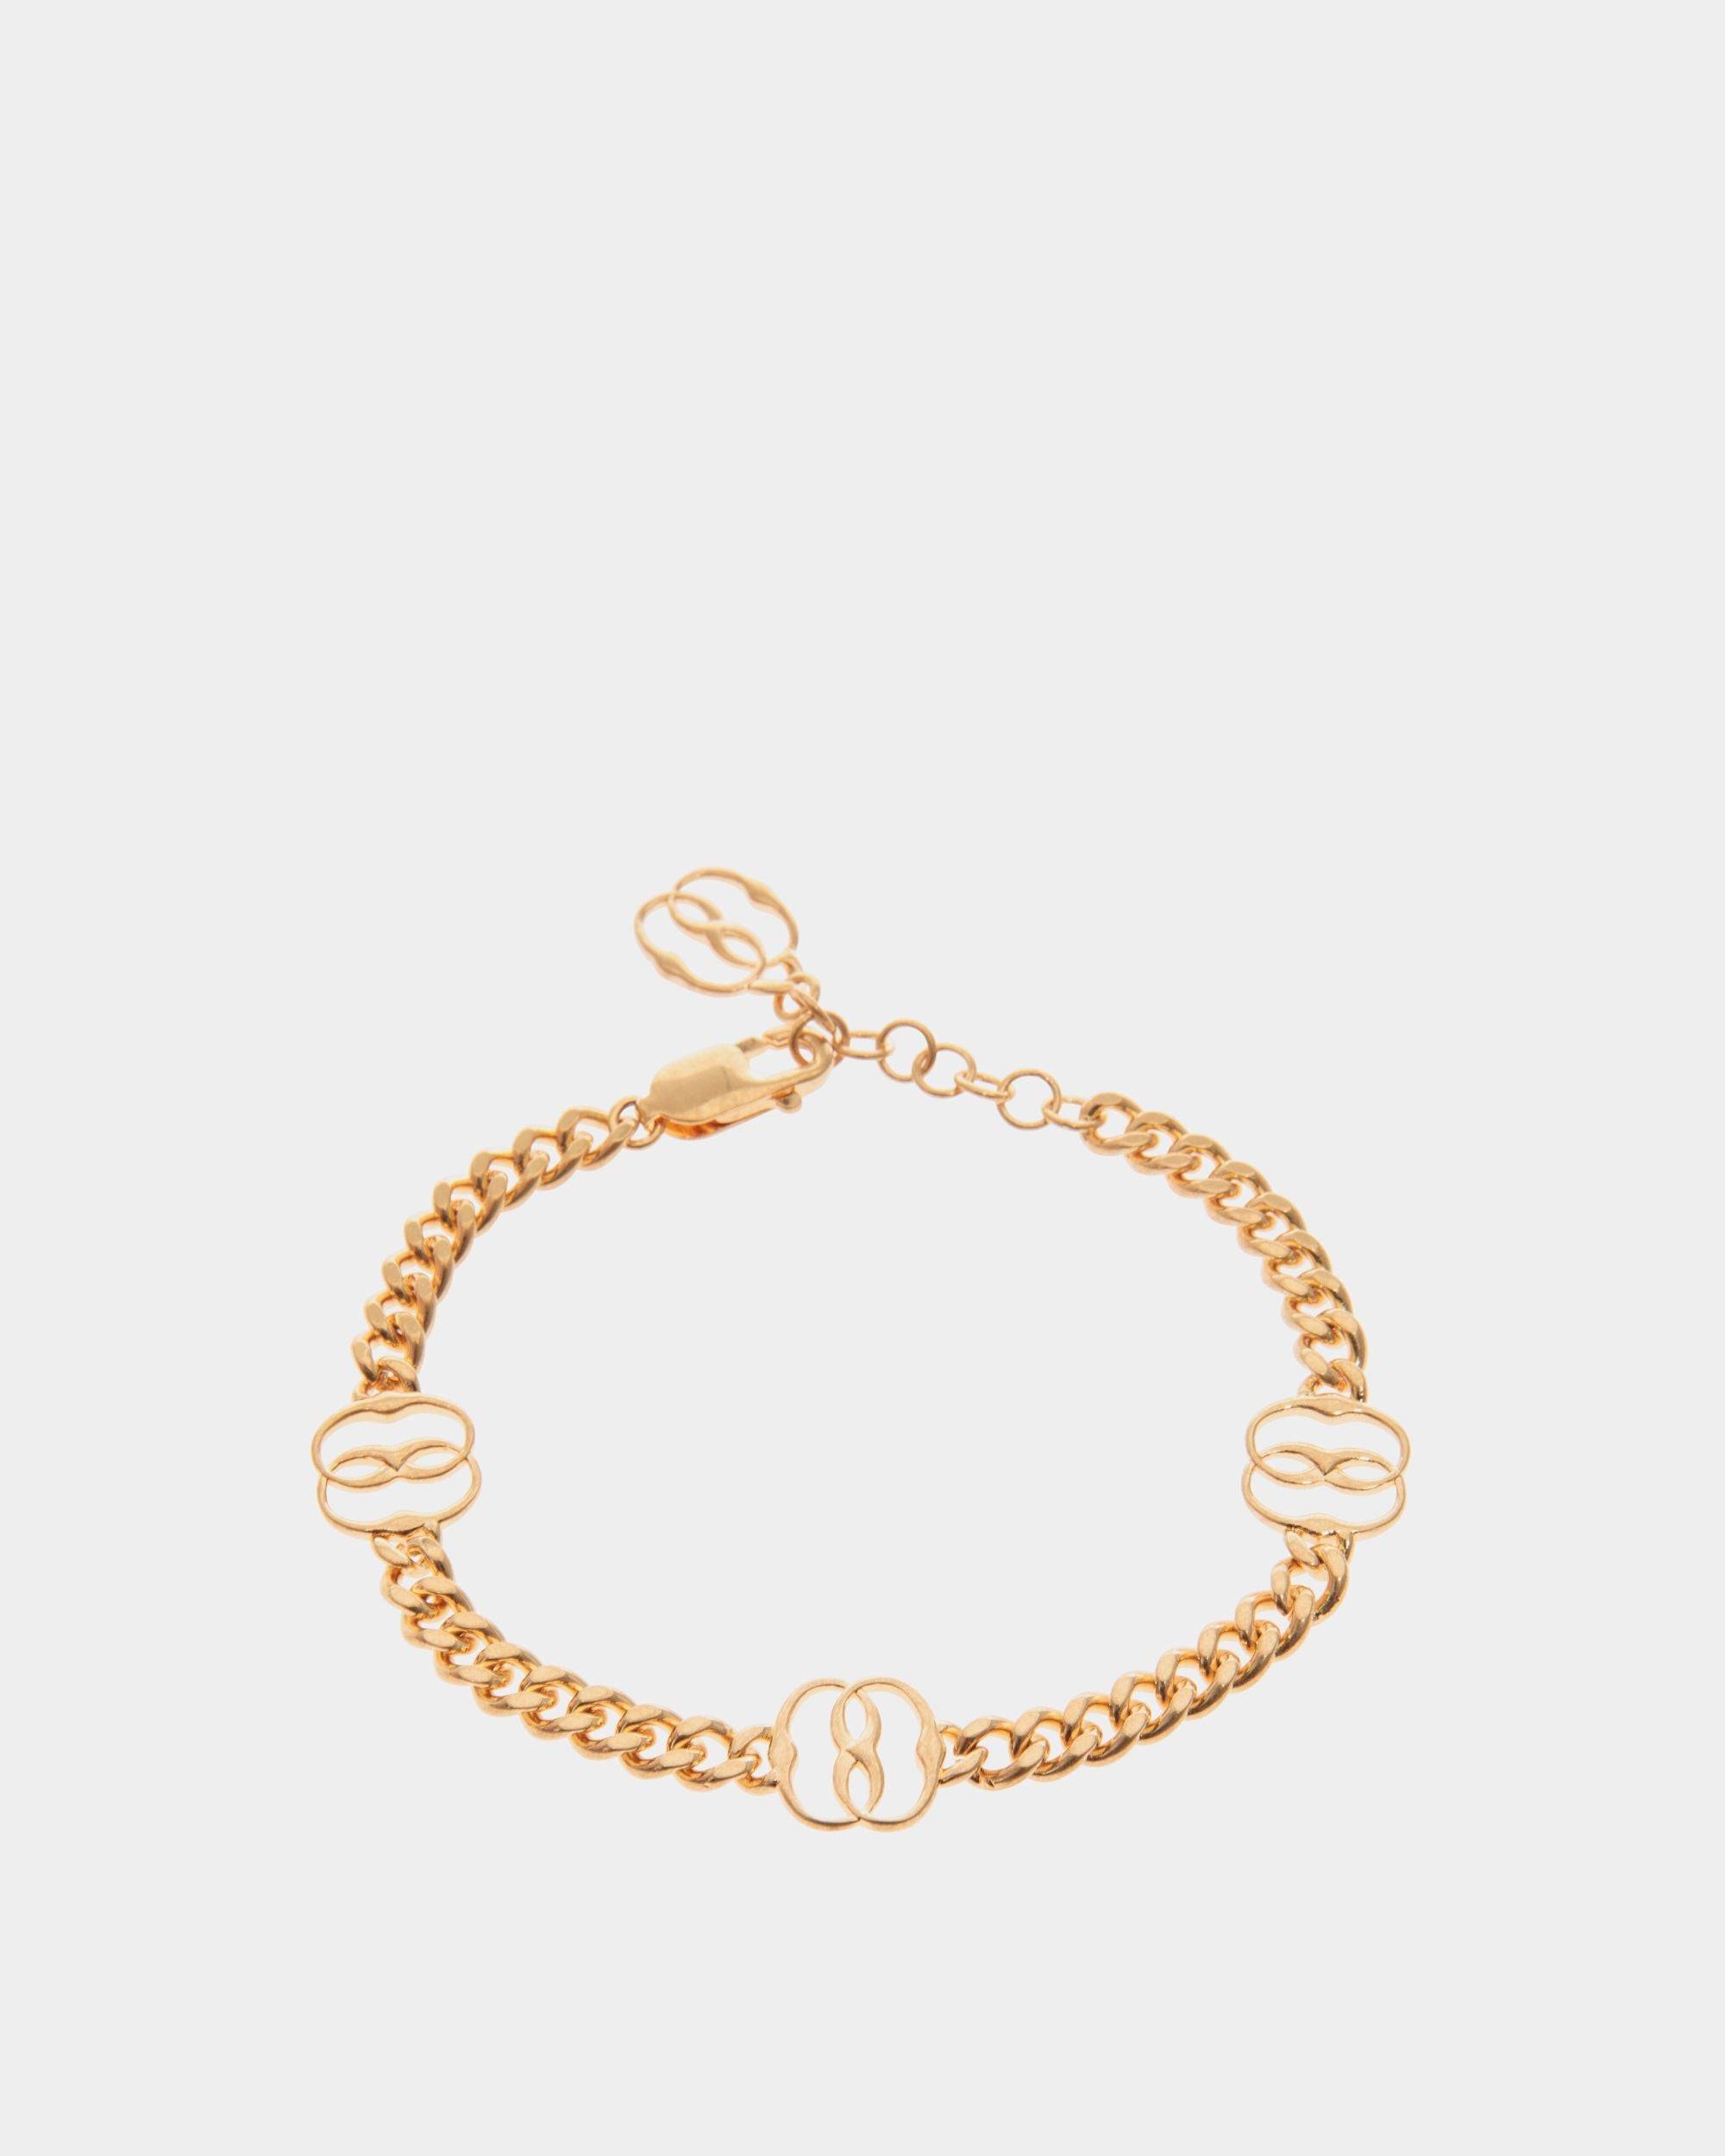 Emblem | Women's Bracelet in Gold Eco Brass | Bally | Still Life Front